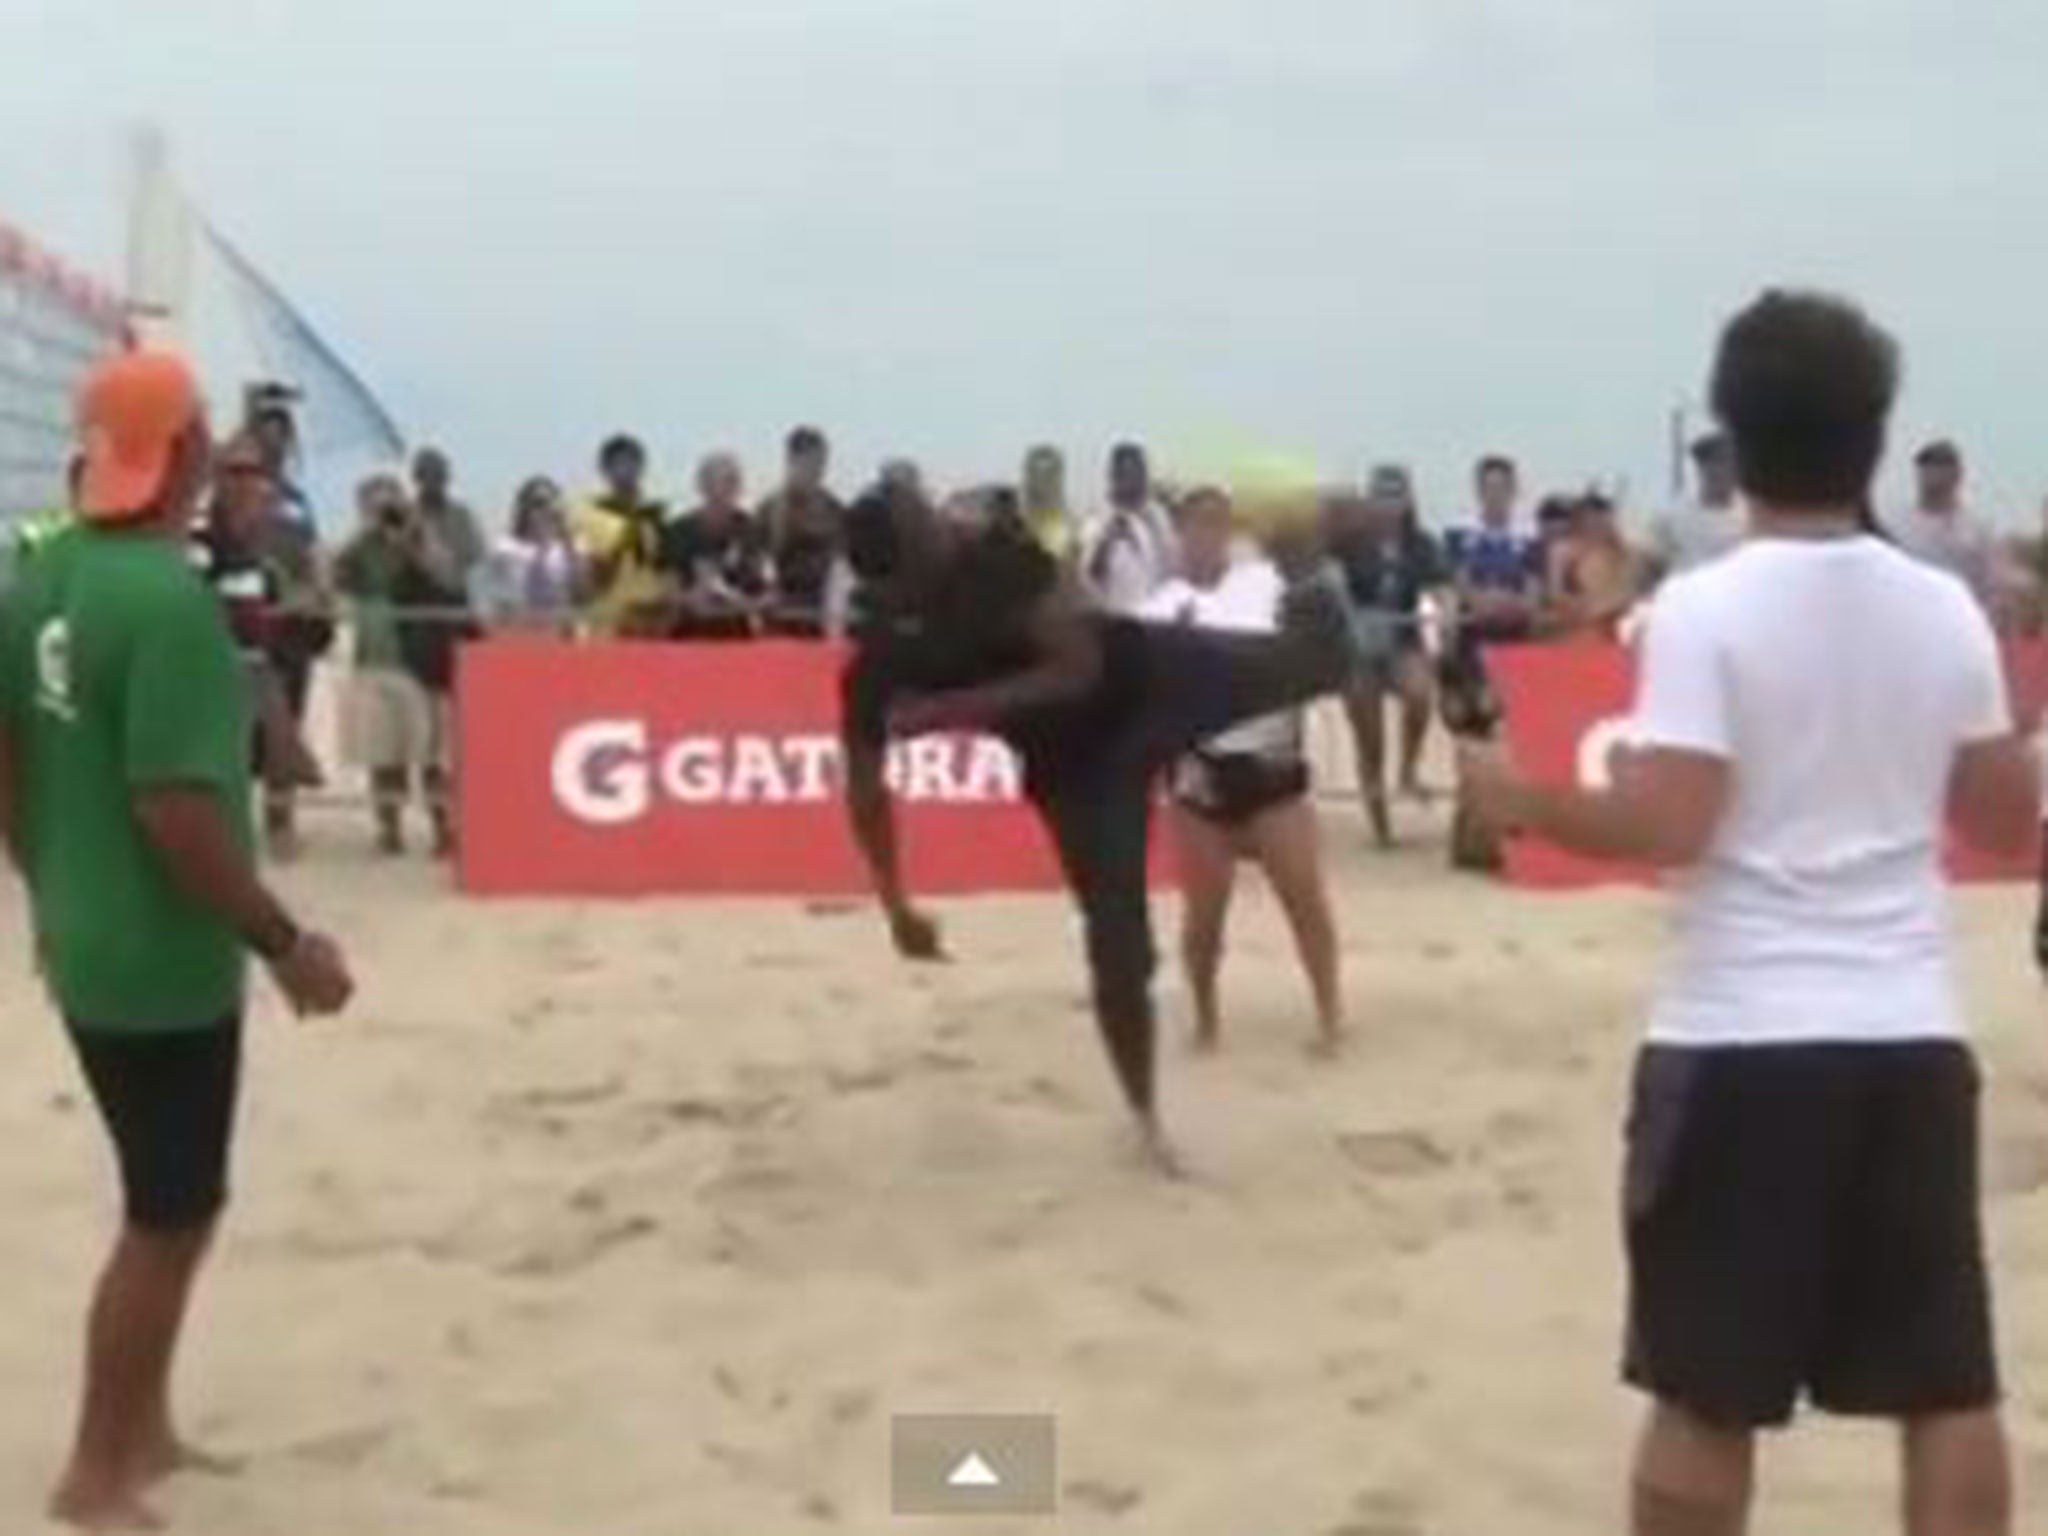 Usain Bolt shows off his skills during FootVolley game on Rio de Janeiro beach